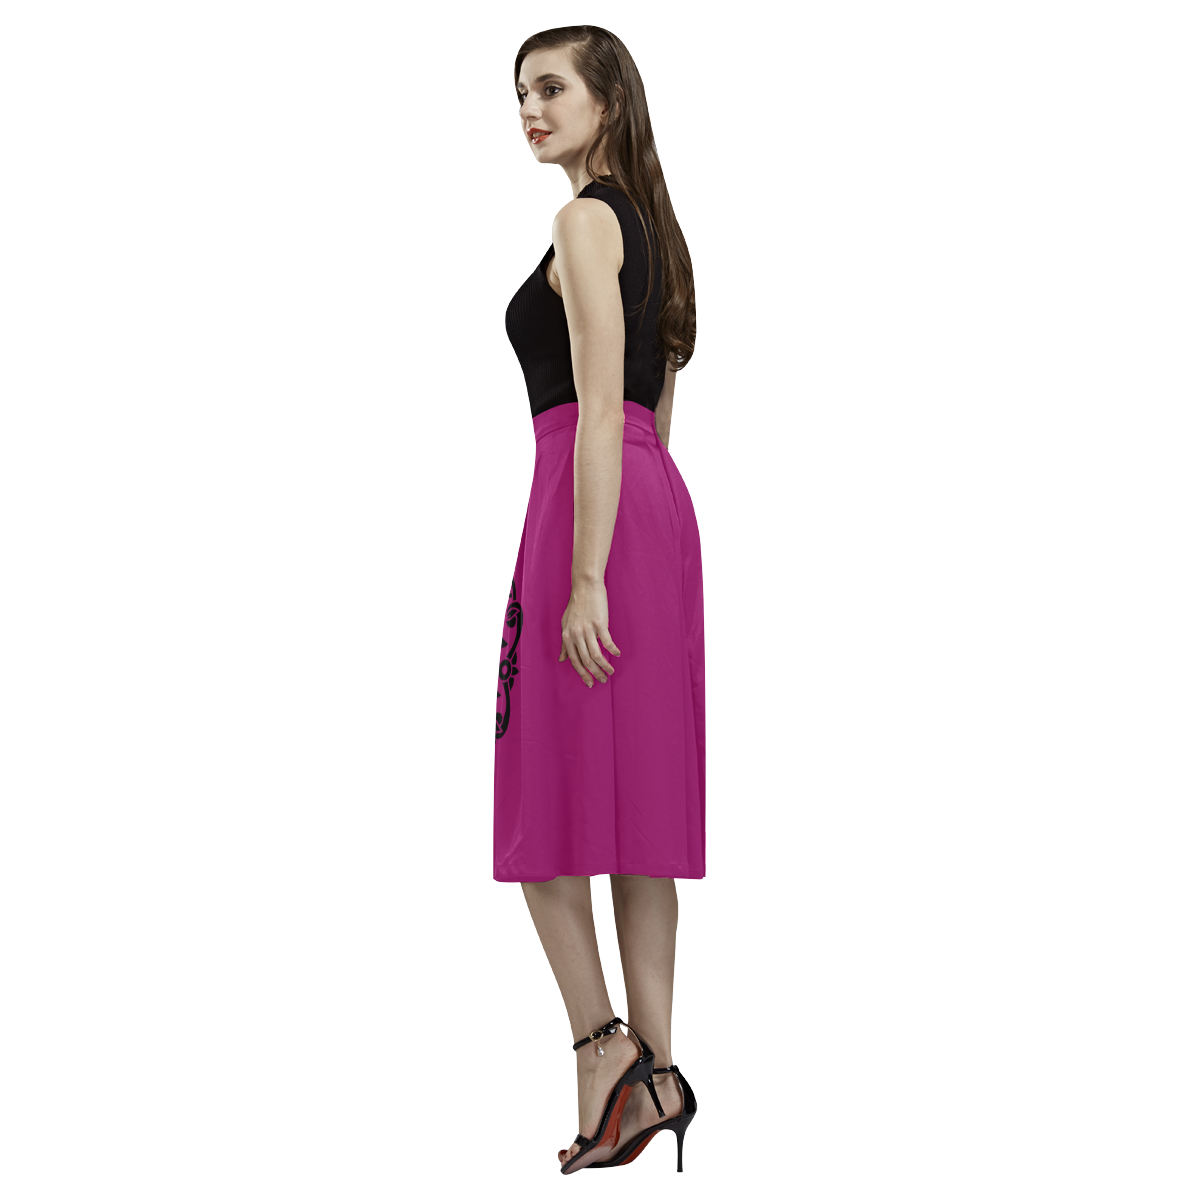 DESIGNERS SKIRT PURPLE WITH BLACK MANDALA Aoede Crepe Skirt (Model D16)